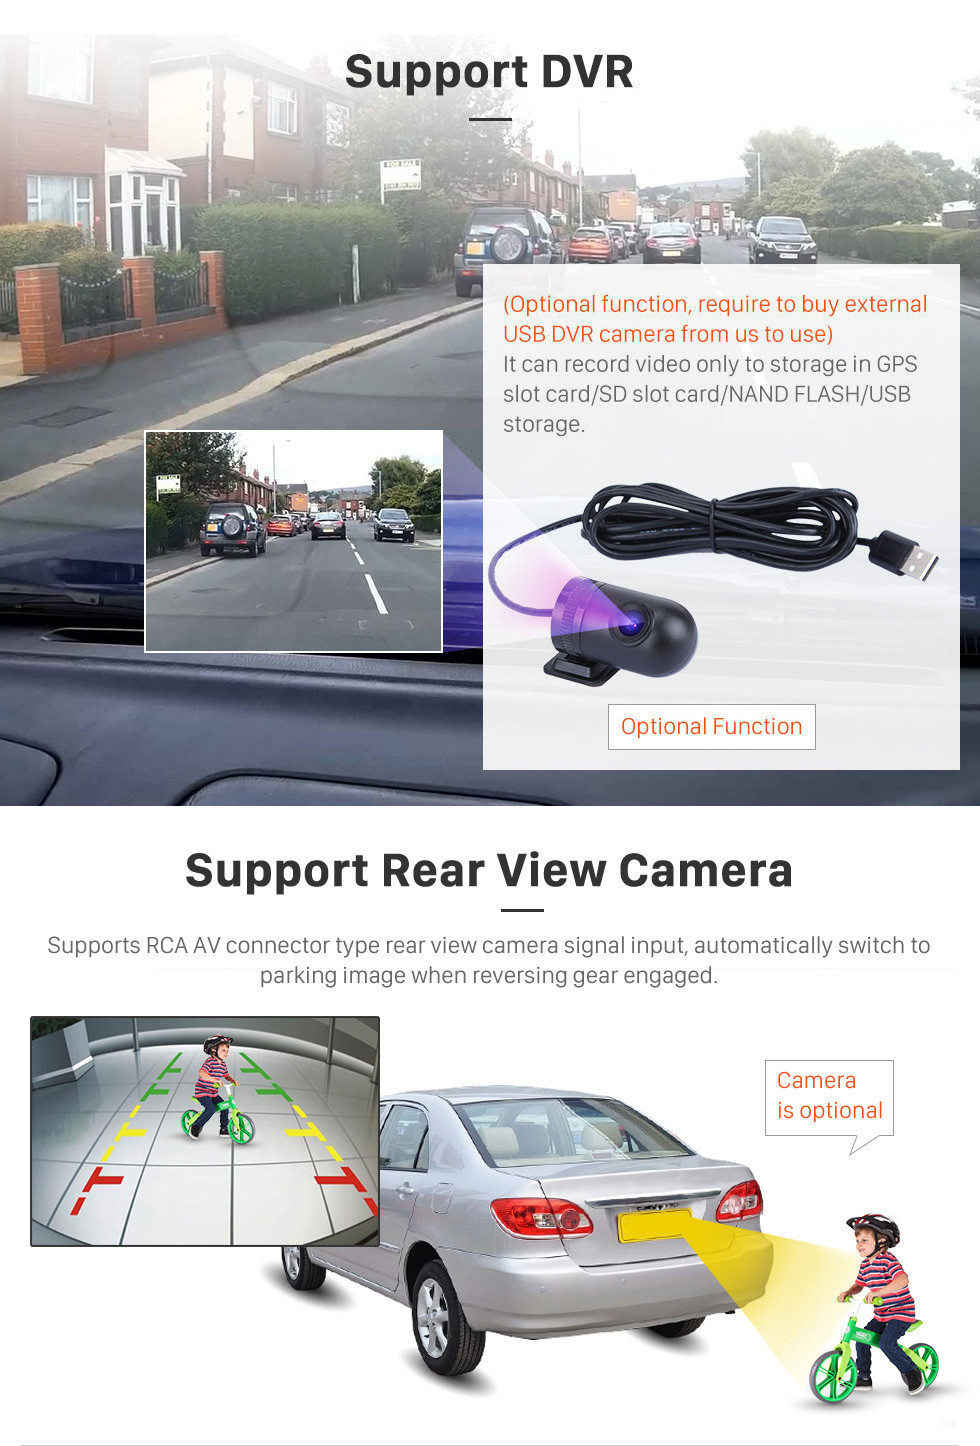 Seicane OEM 9-дюймовый Android 12.0 Радио для 2018 Ford Ranger Bluetooth HD с сенсорным экраном GPS-навигация Музыка AUX Поддержка Carplay TPMS